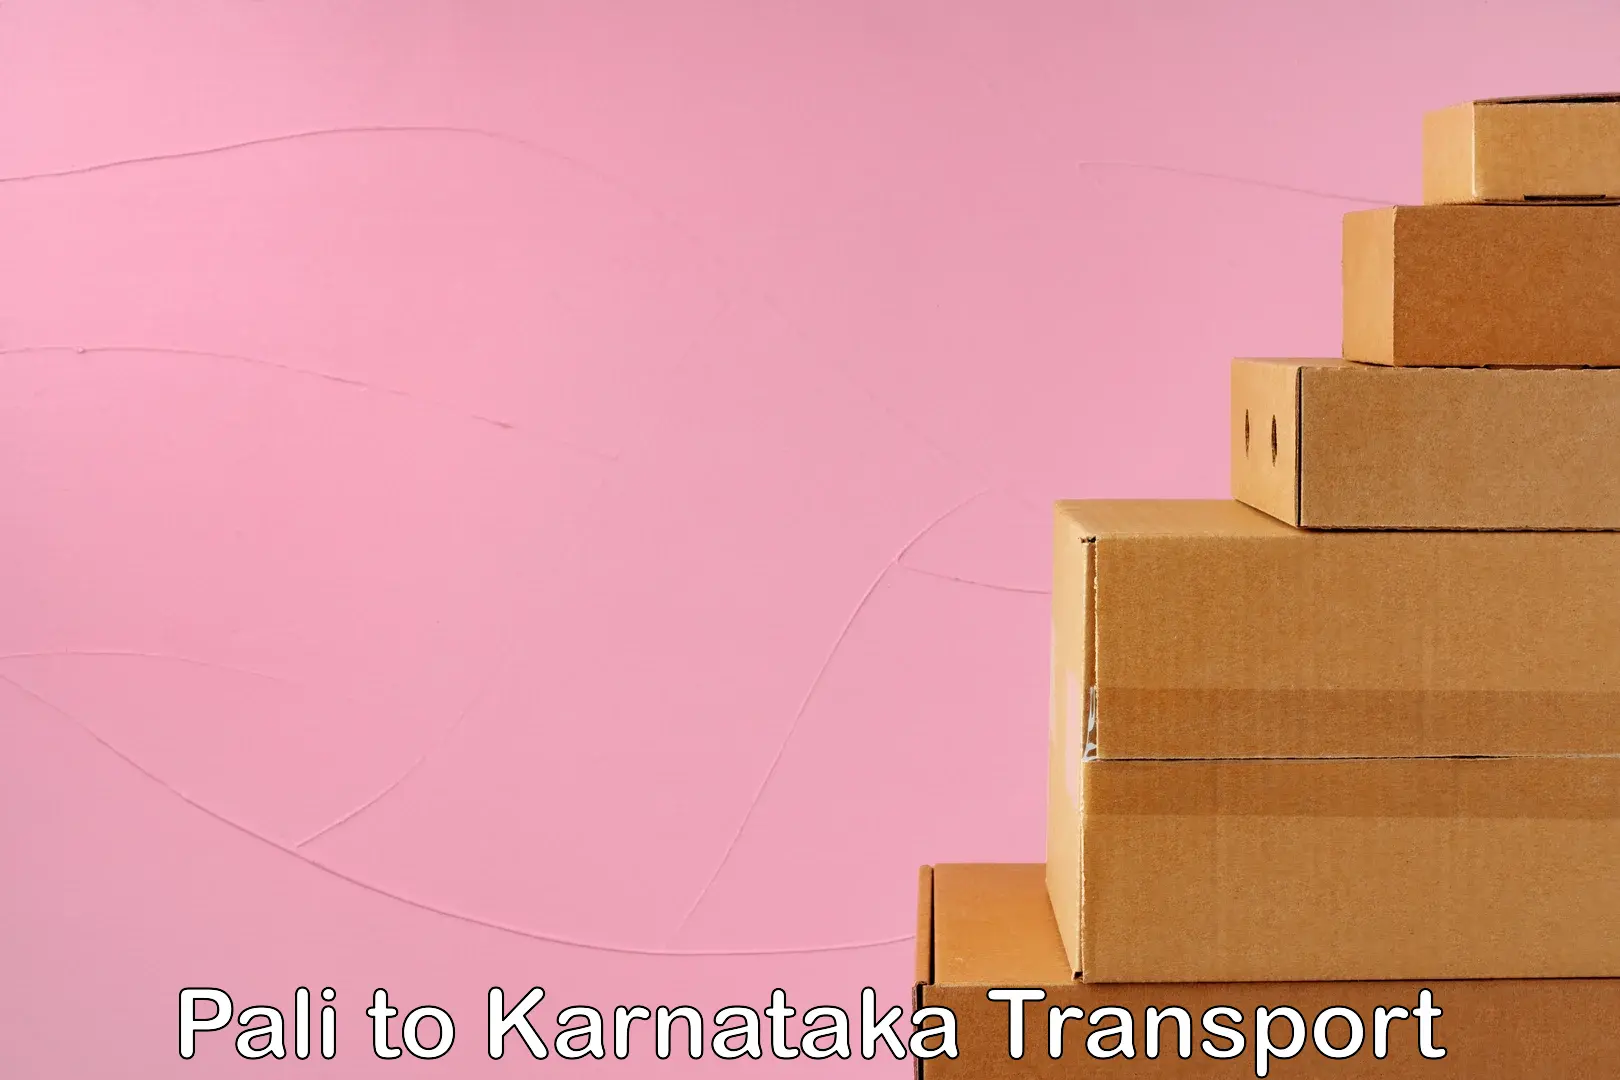 Delivery service Pali to Karnataka